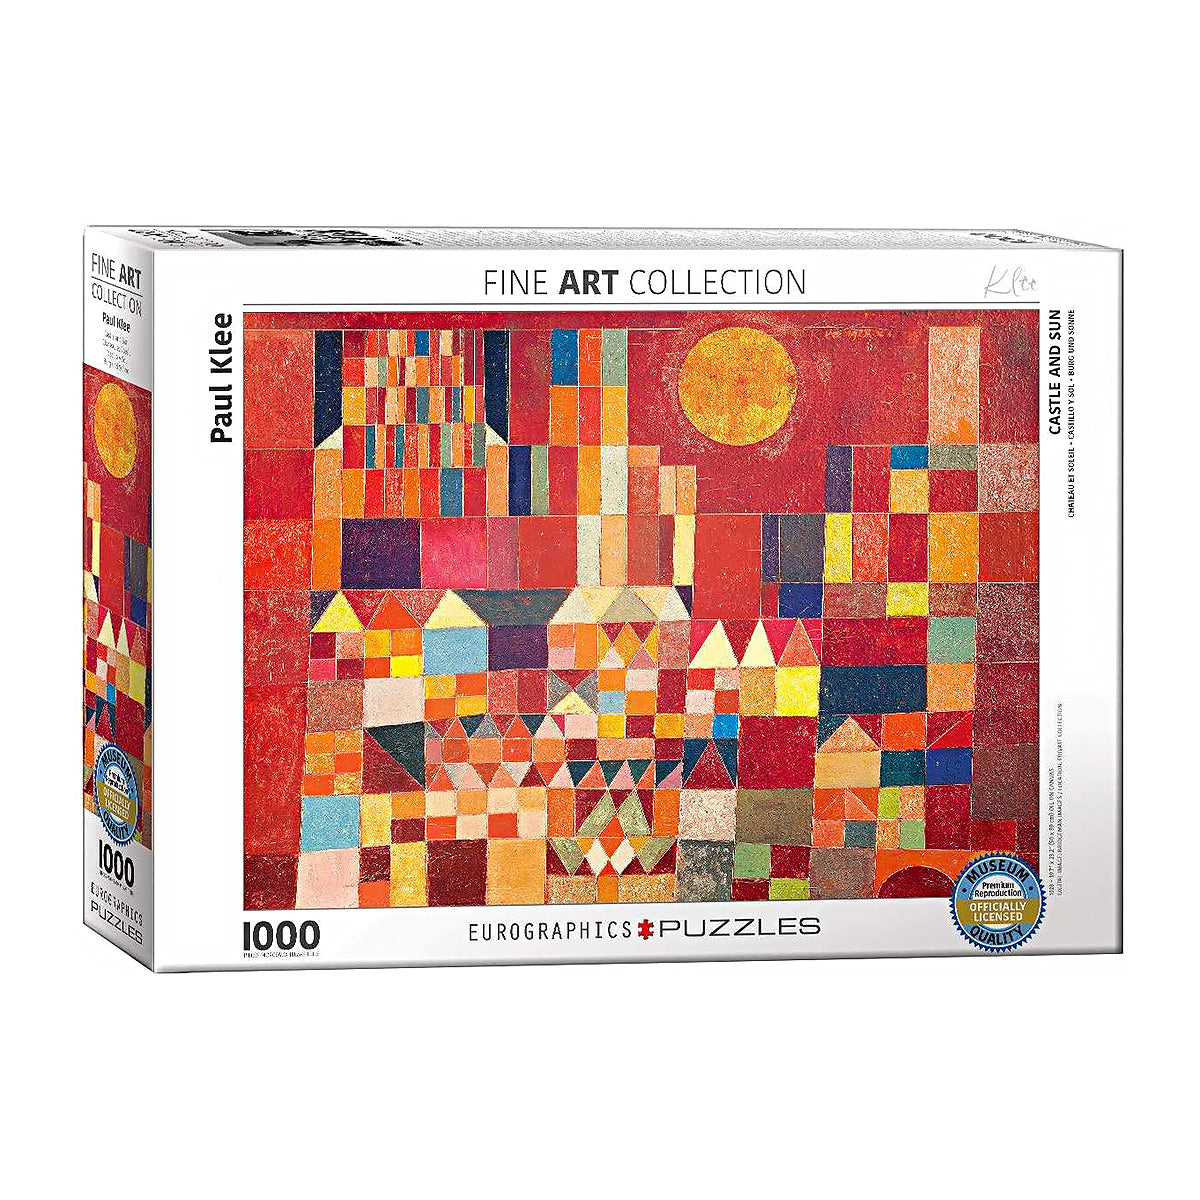 Premium quality Paul Klee Castle and Sun smart cut jigsaw puzzle for art collectors.